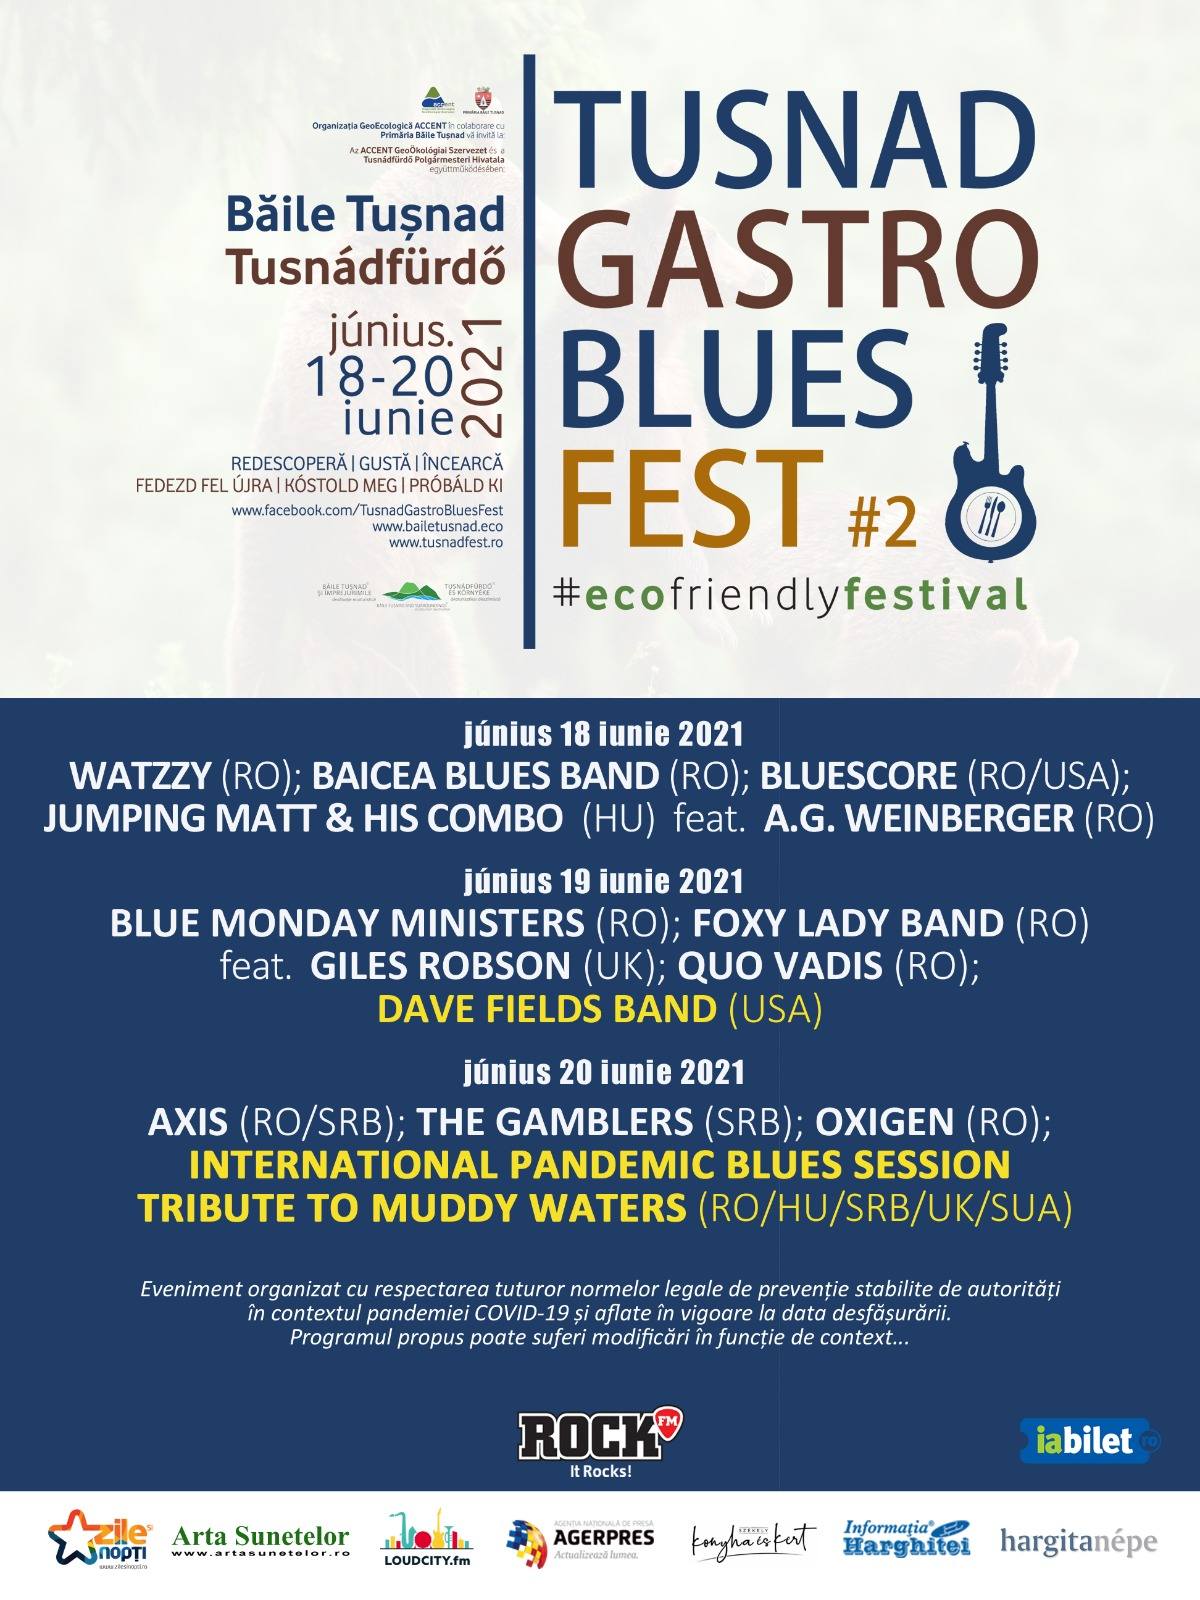 Tusnad Gastro Blues Fest - Program final si reguli de acces